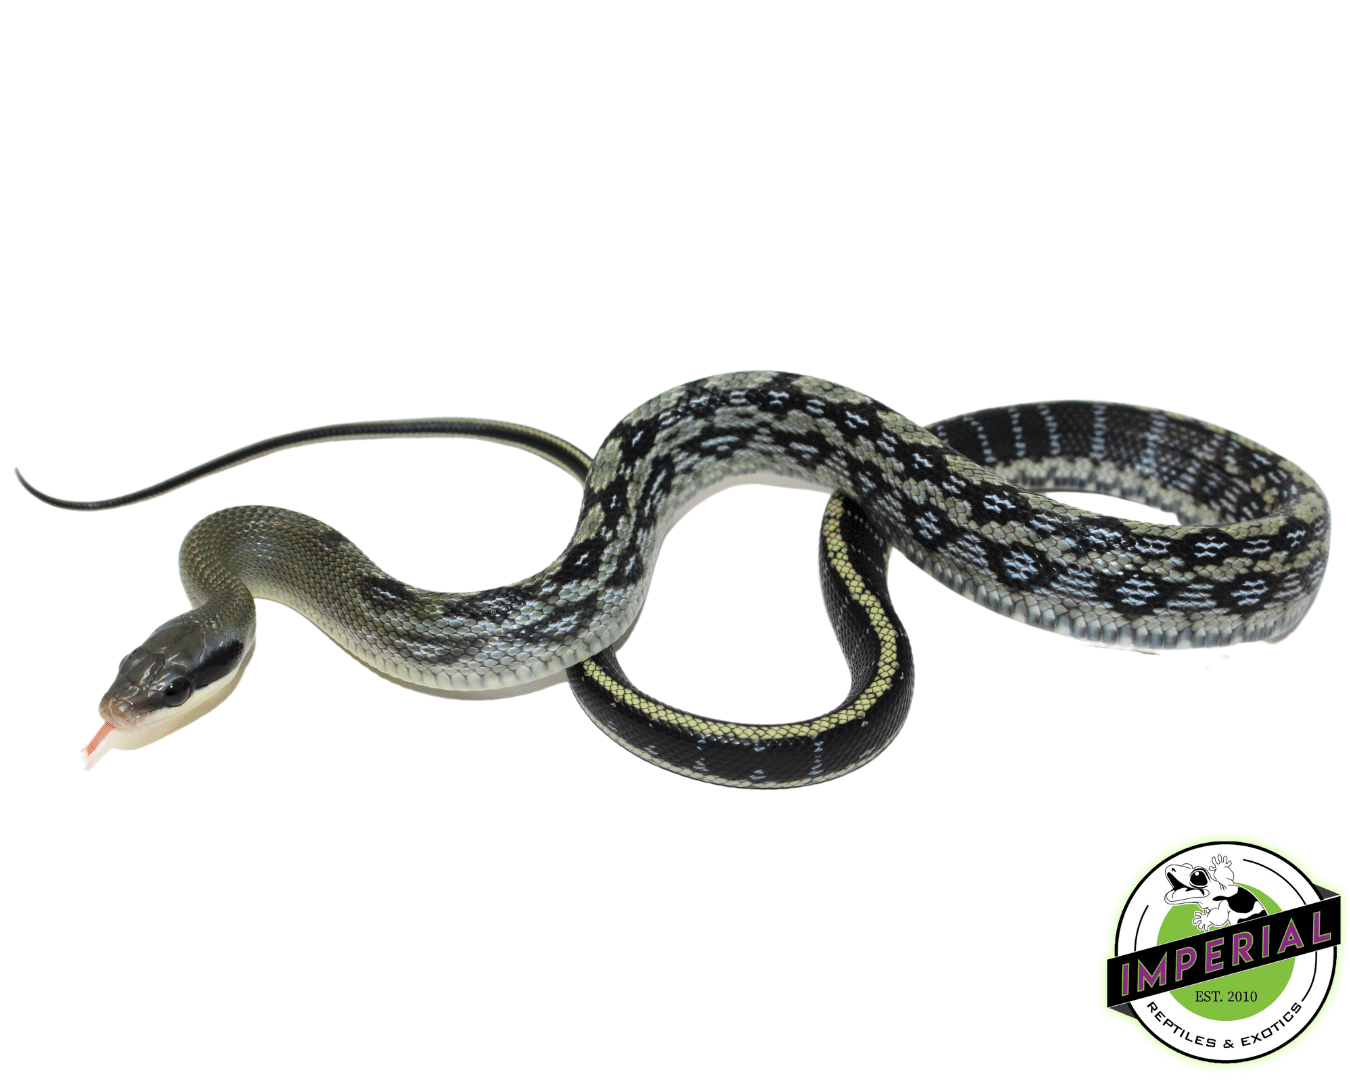 blue beauty rat snake for sale, buy reptiles online